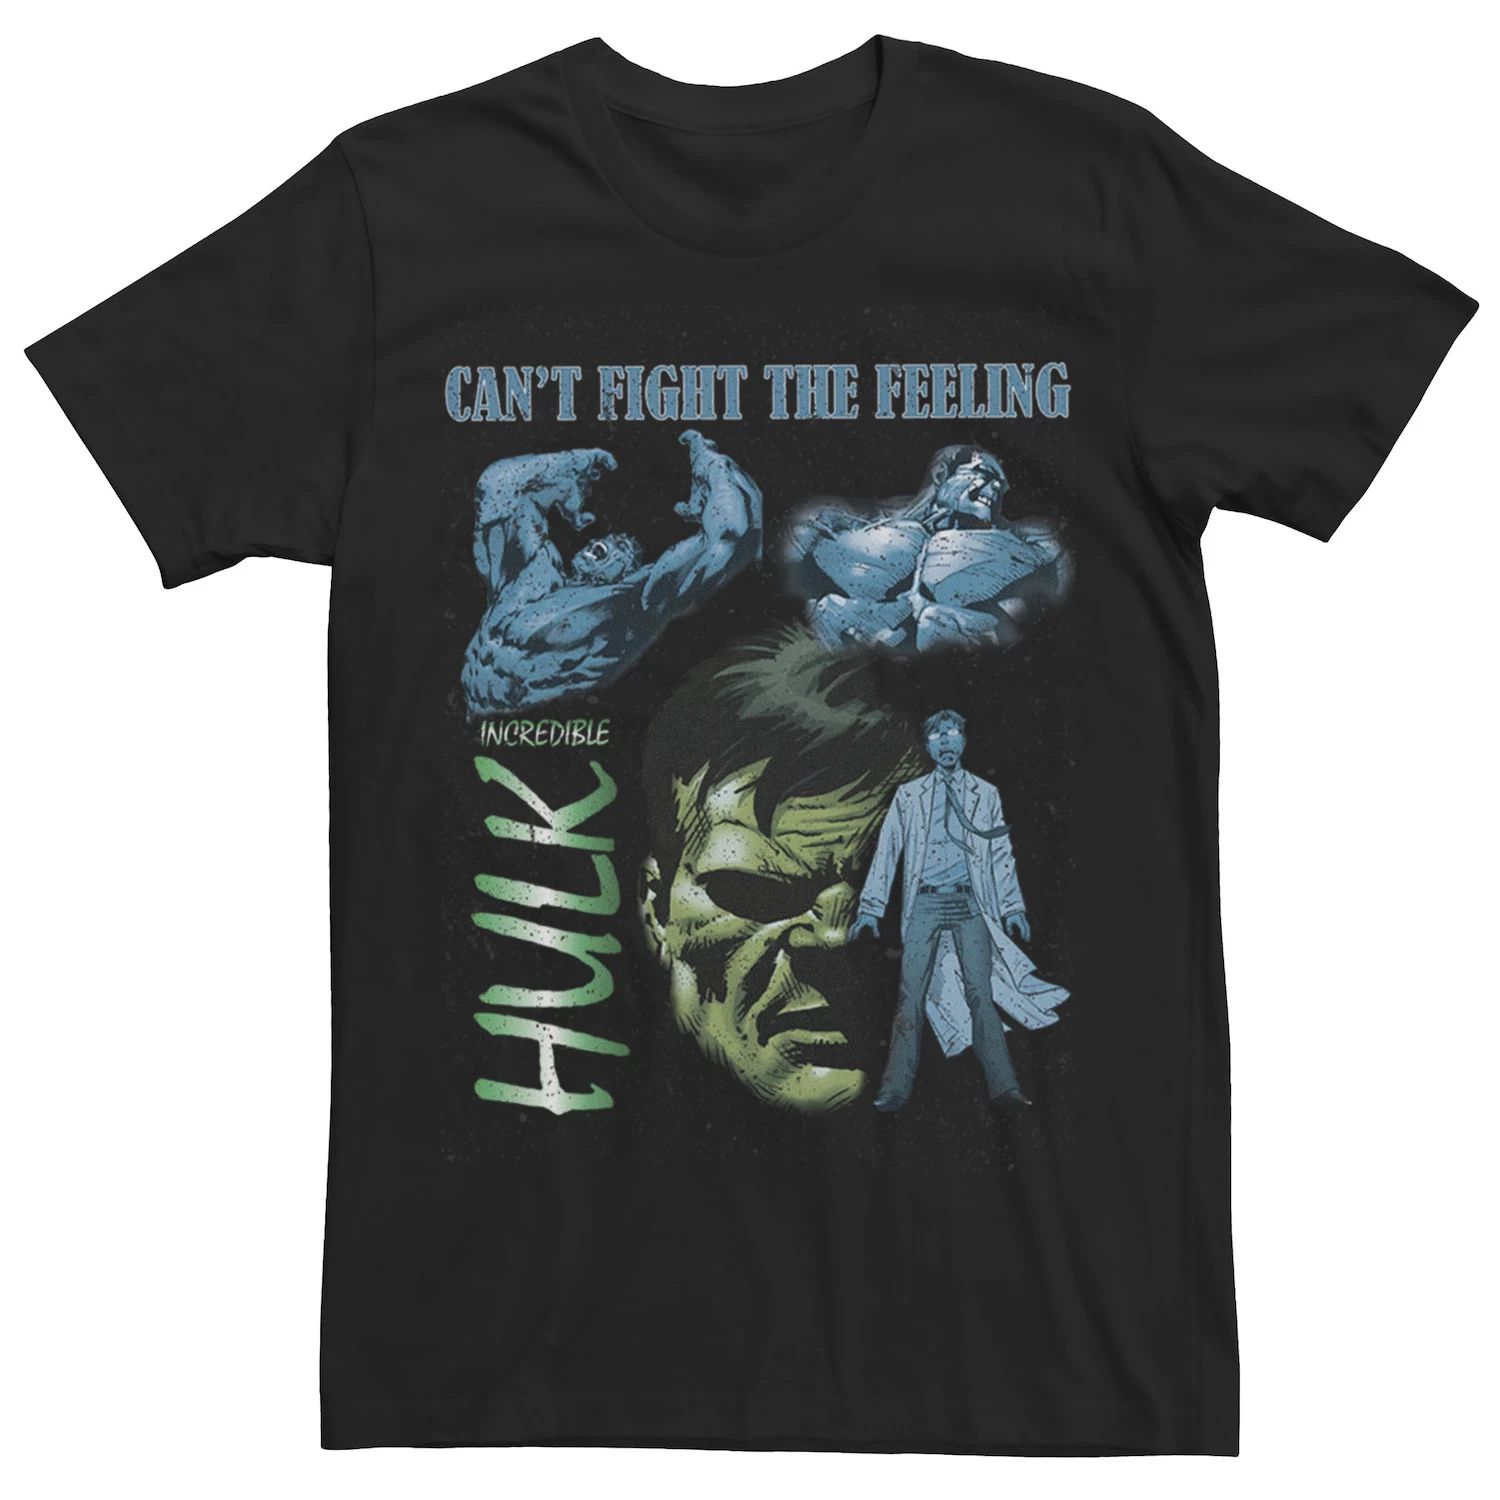 Мужская футболка с графическим плакатом Hulk Homage Marvel мужская худи с графическим плакатом runaways group marvel